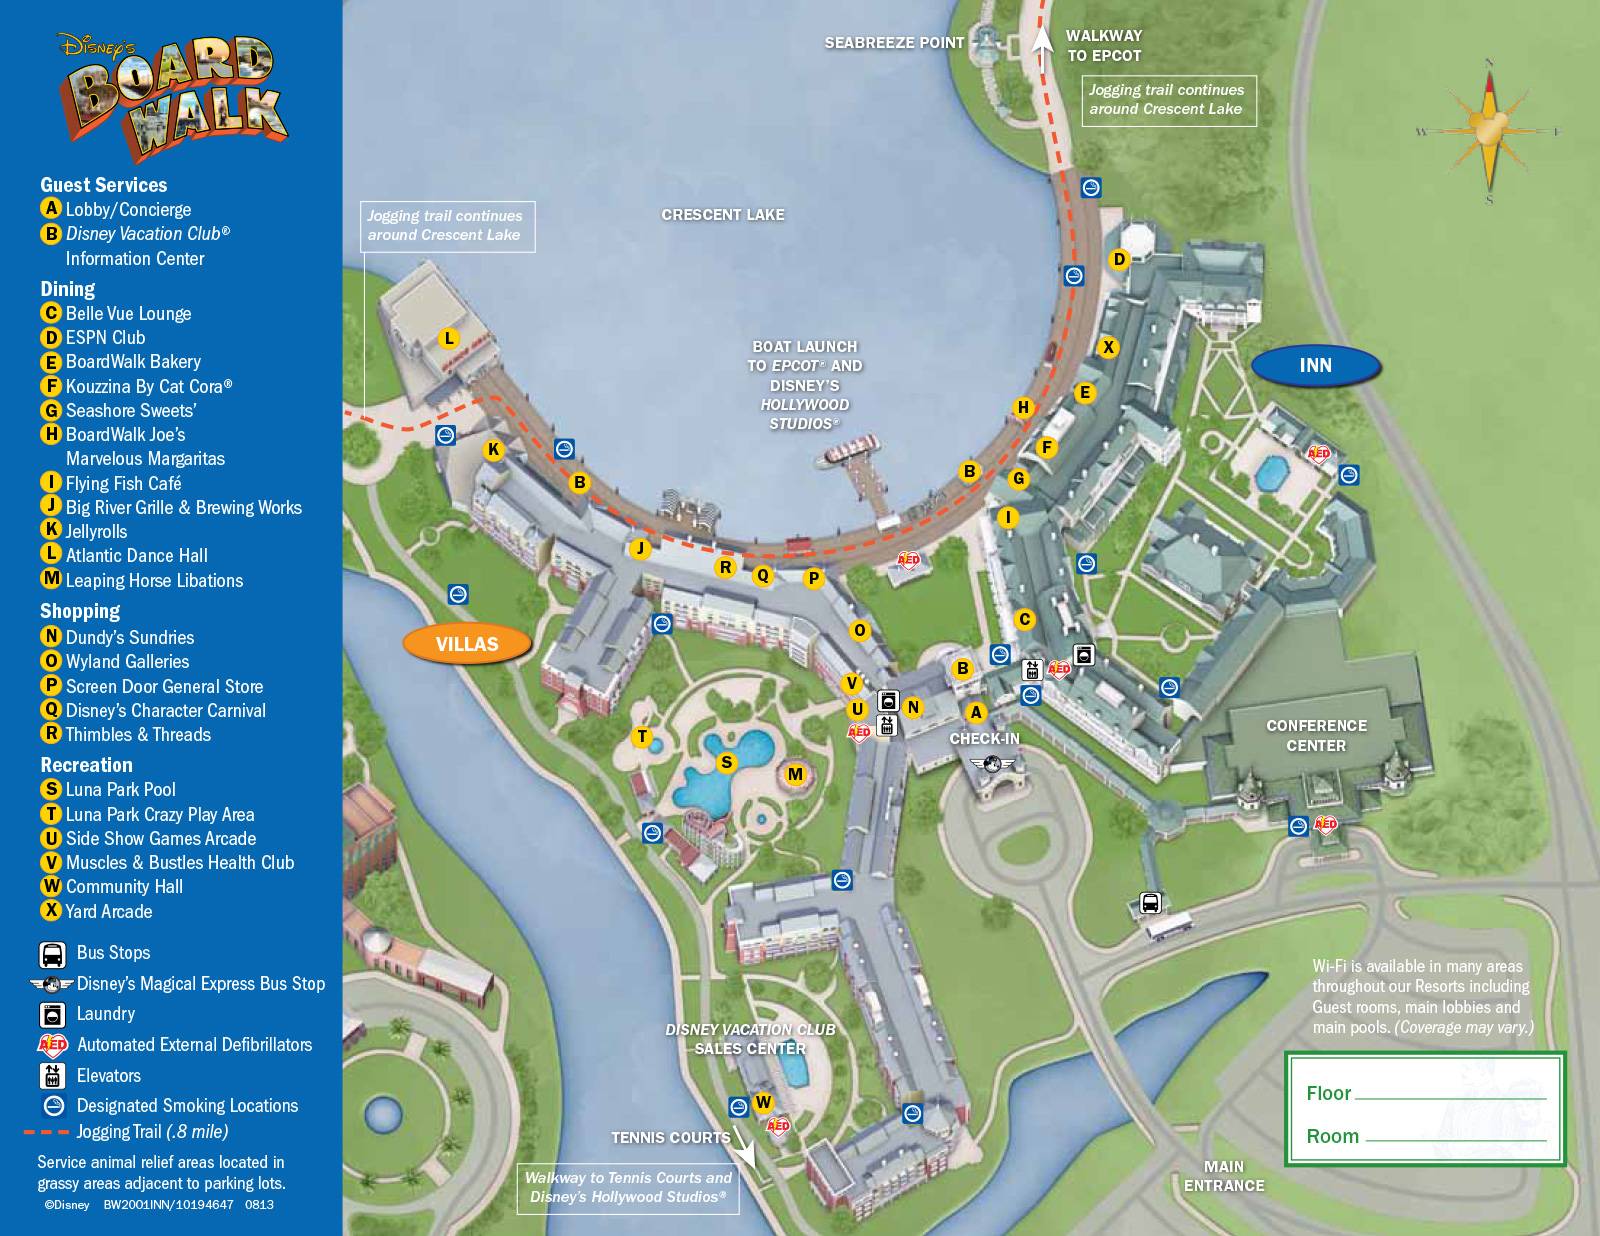 New 2013 BoardWalk Resort map